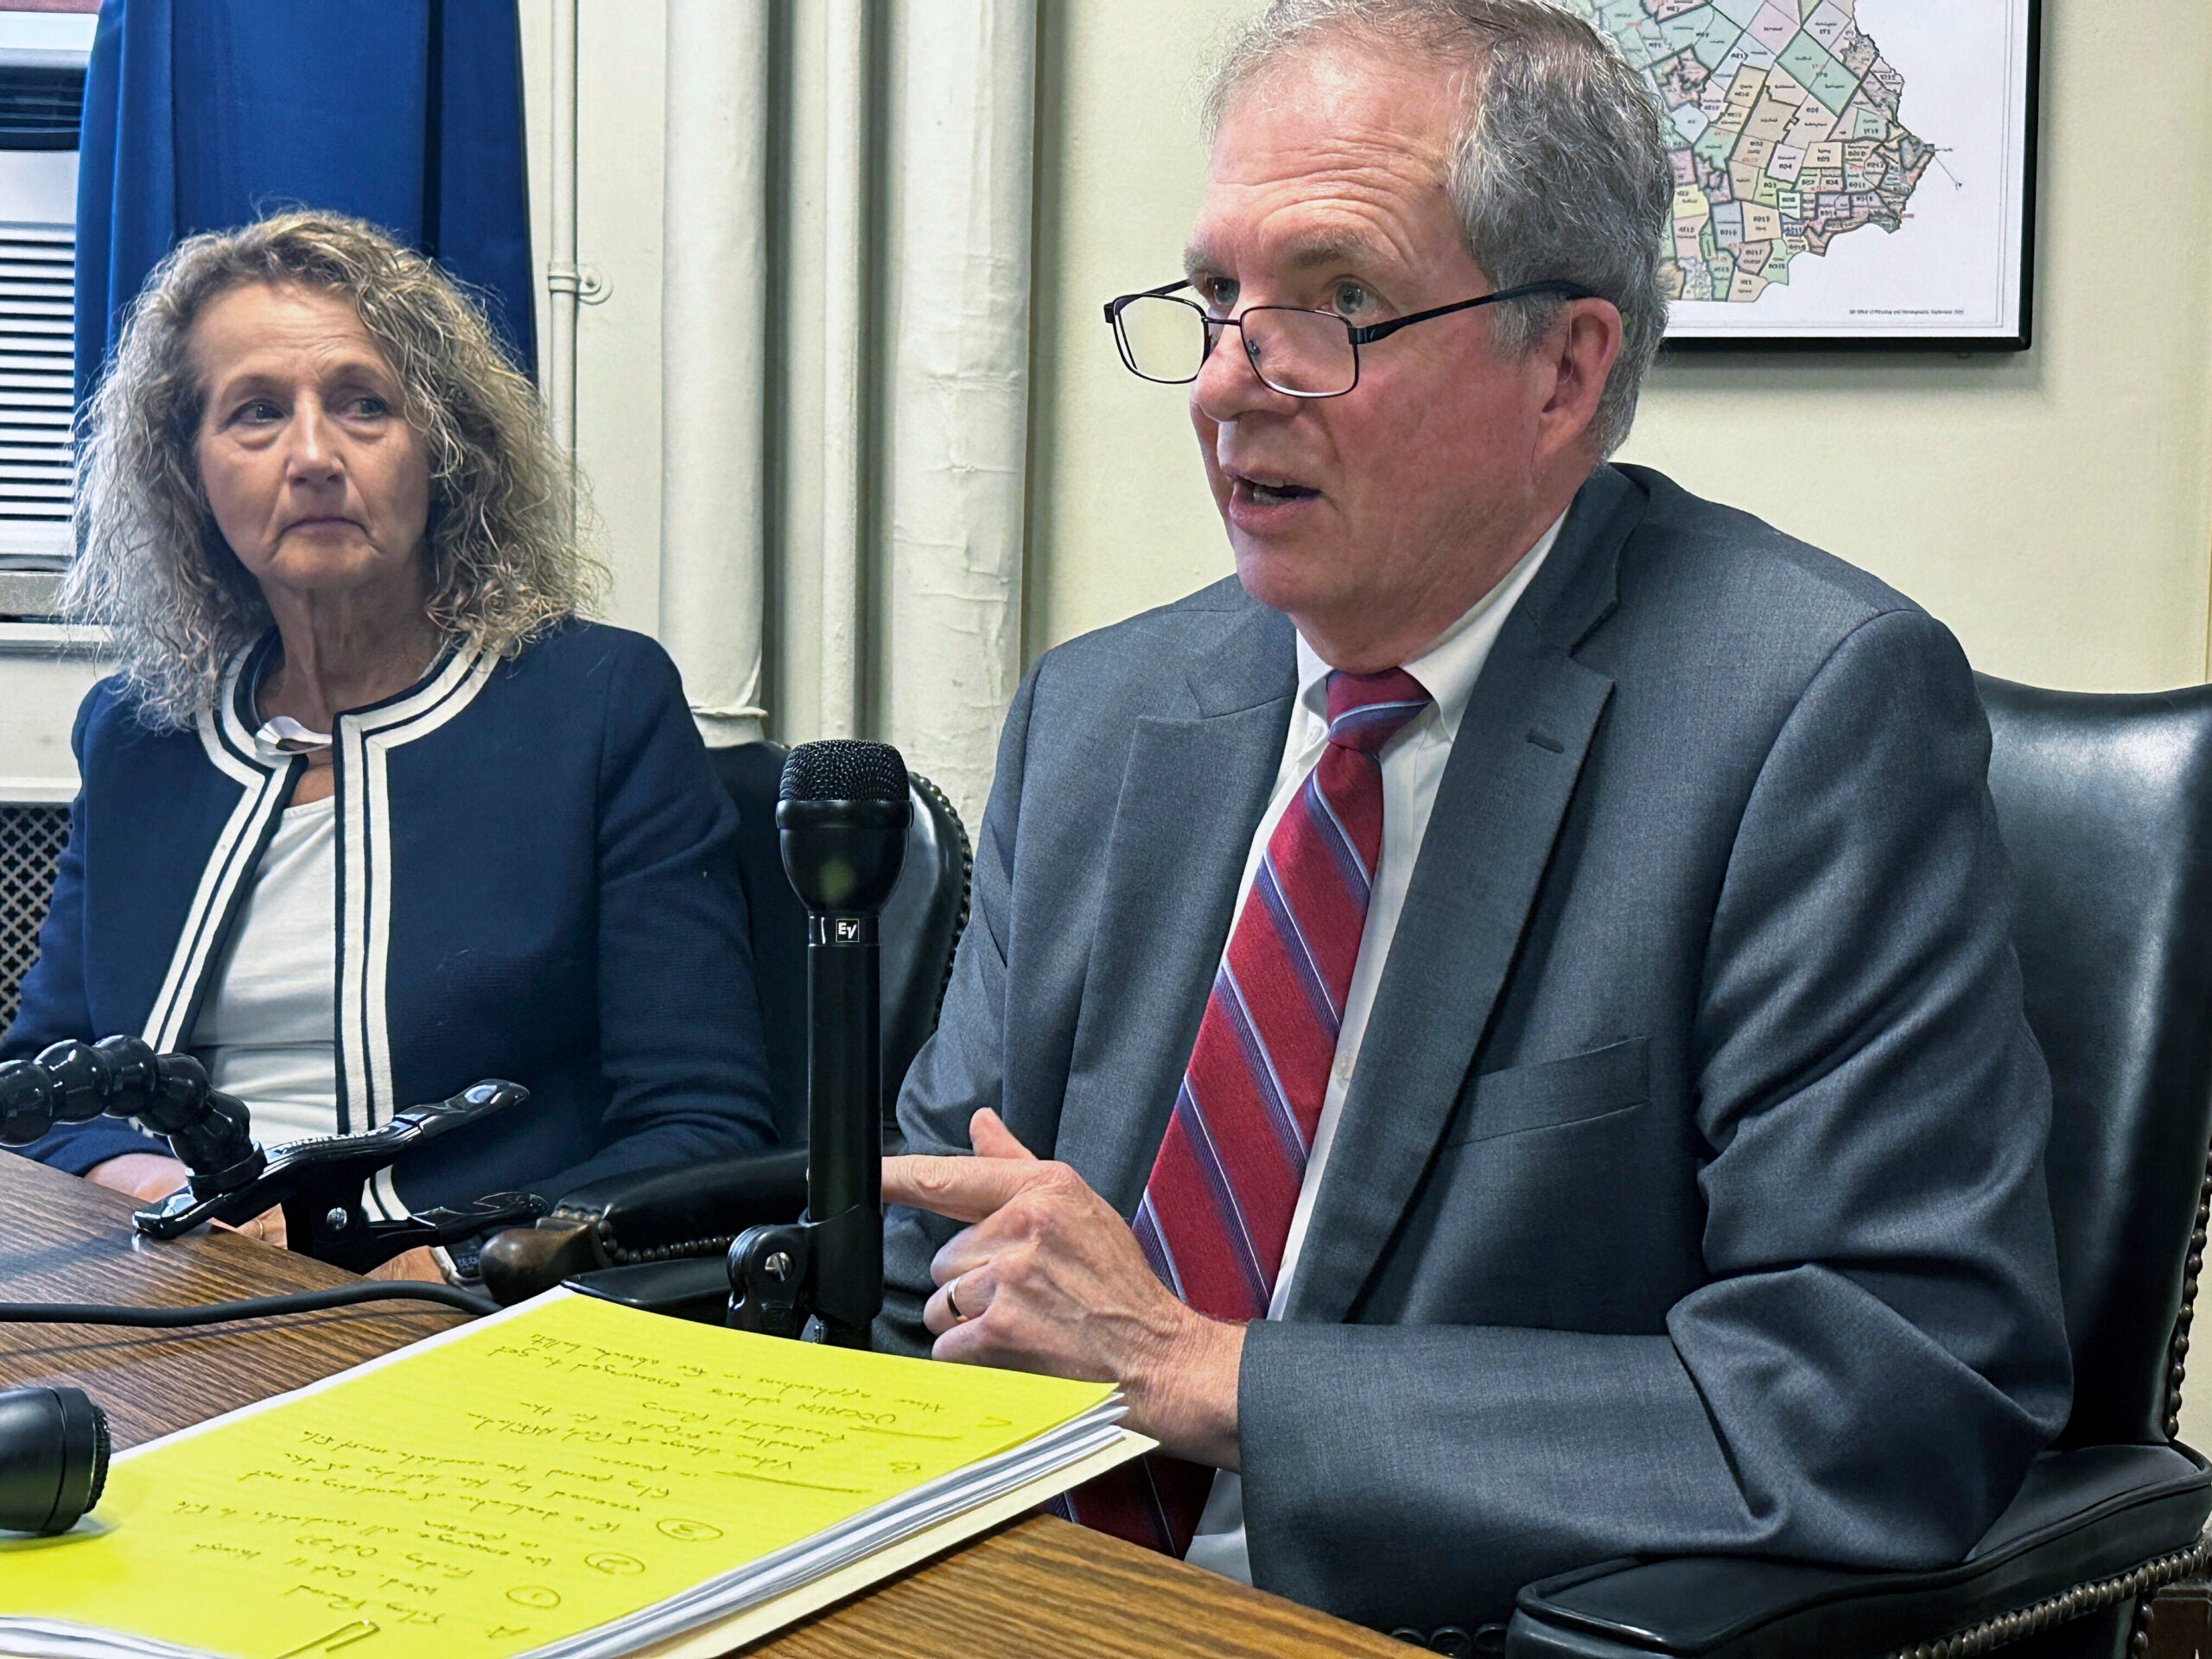 New Hampshire Deputy Secretary of State Patricia Lovejoy looks on as Secretary of State David Scanlan talks.